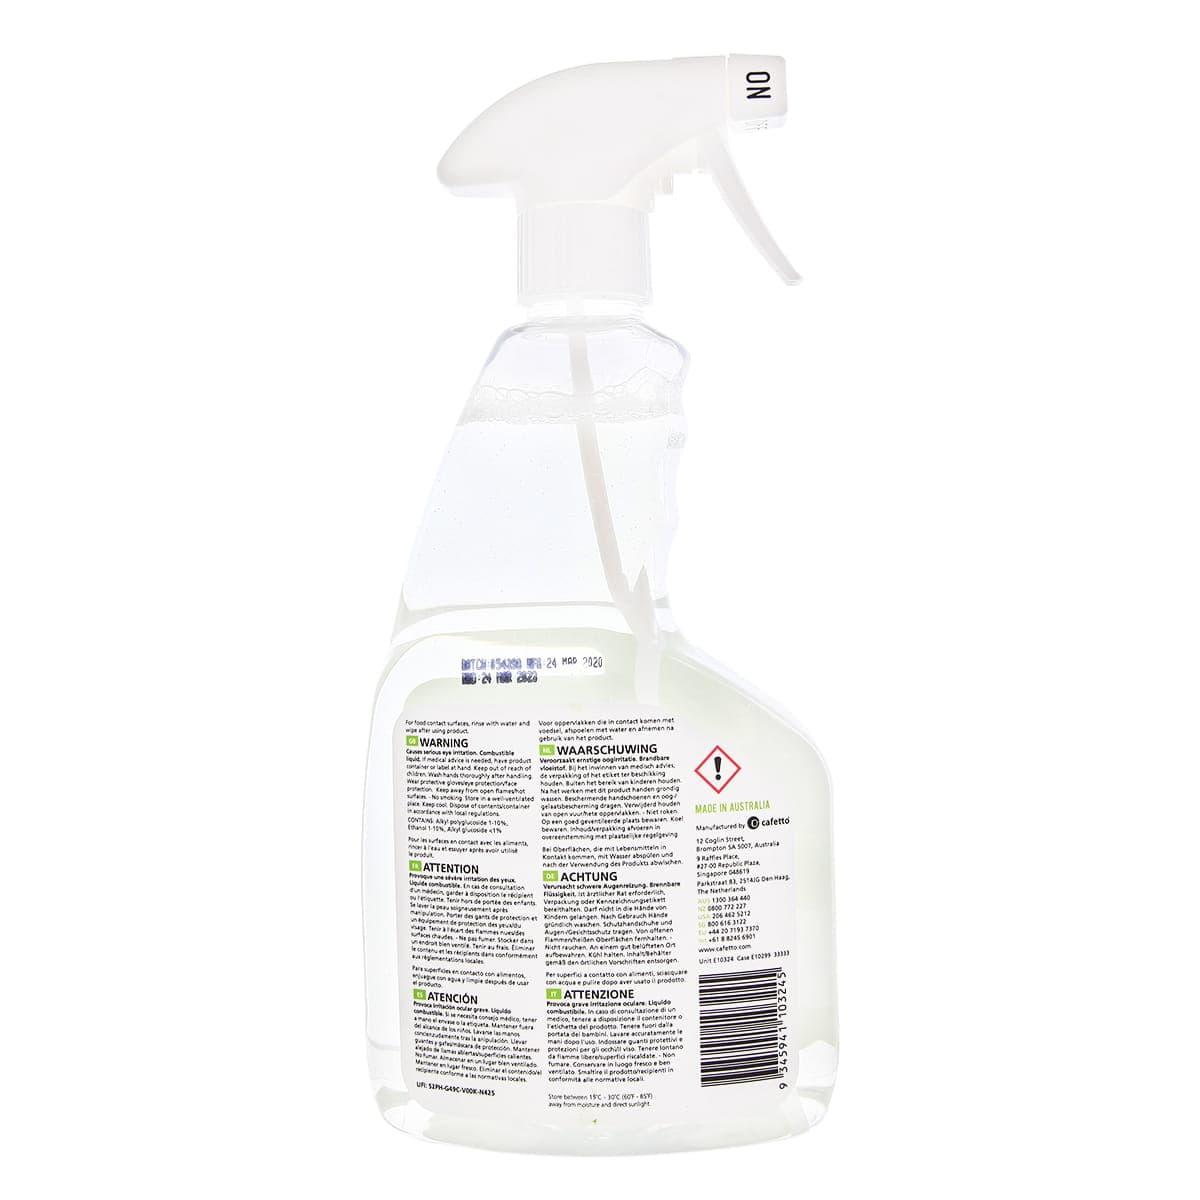 Средство для чистки поверхностей Cafetto Spray & Wipe, 750 мл, органик